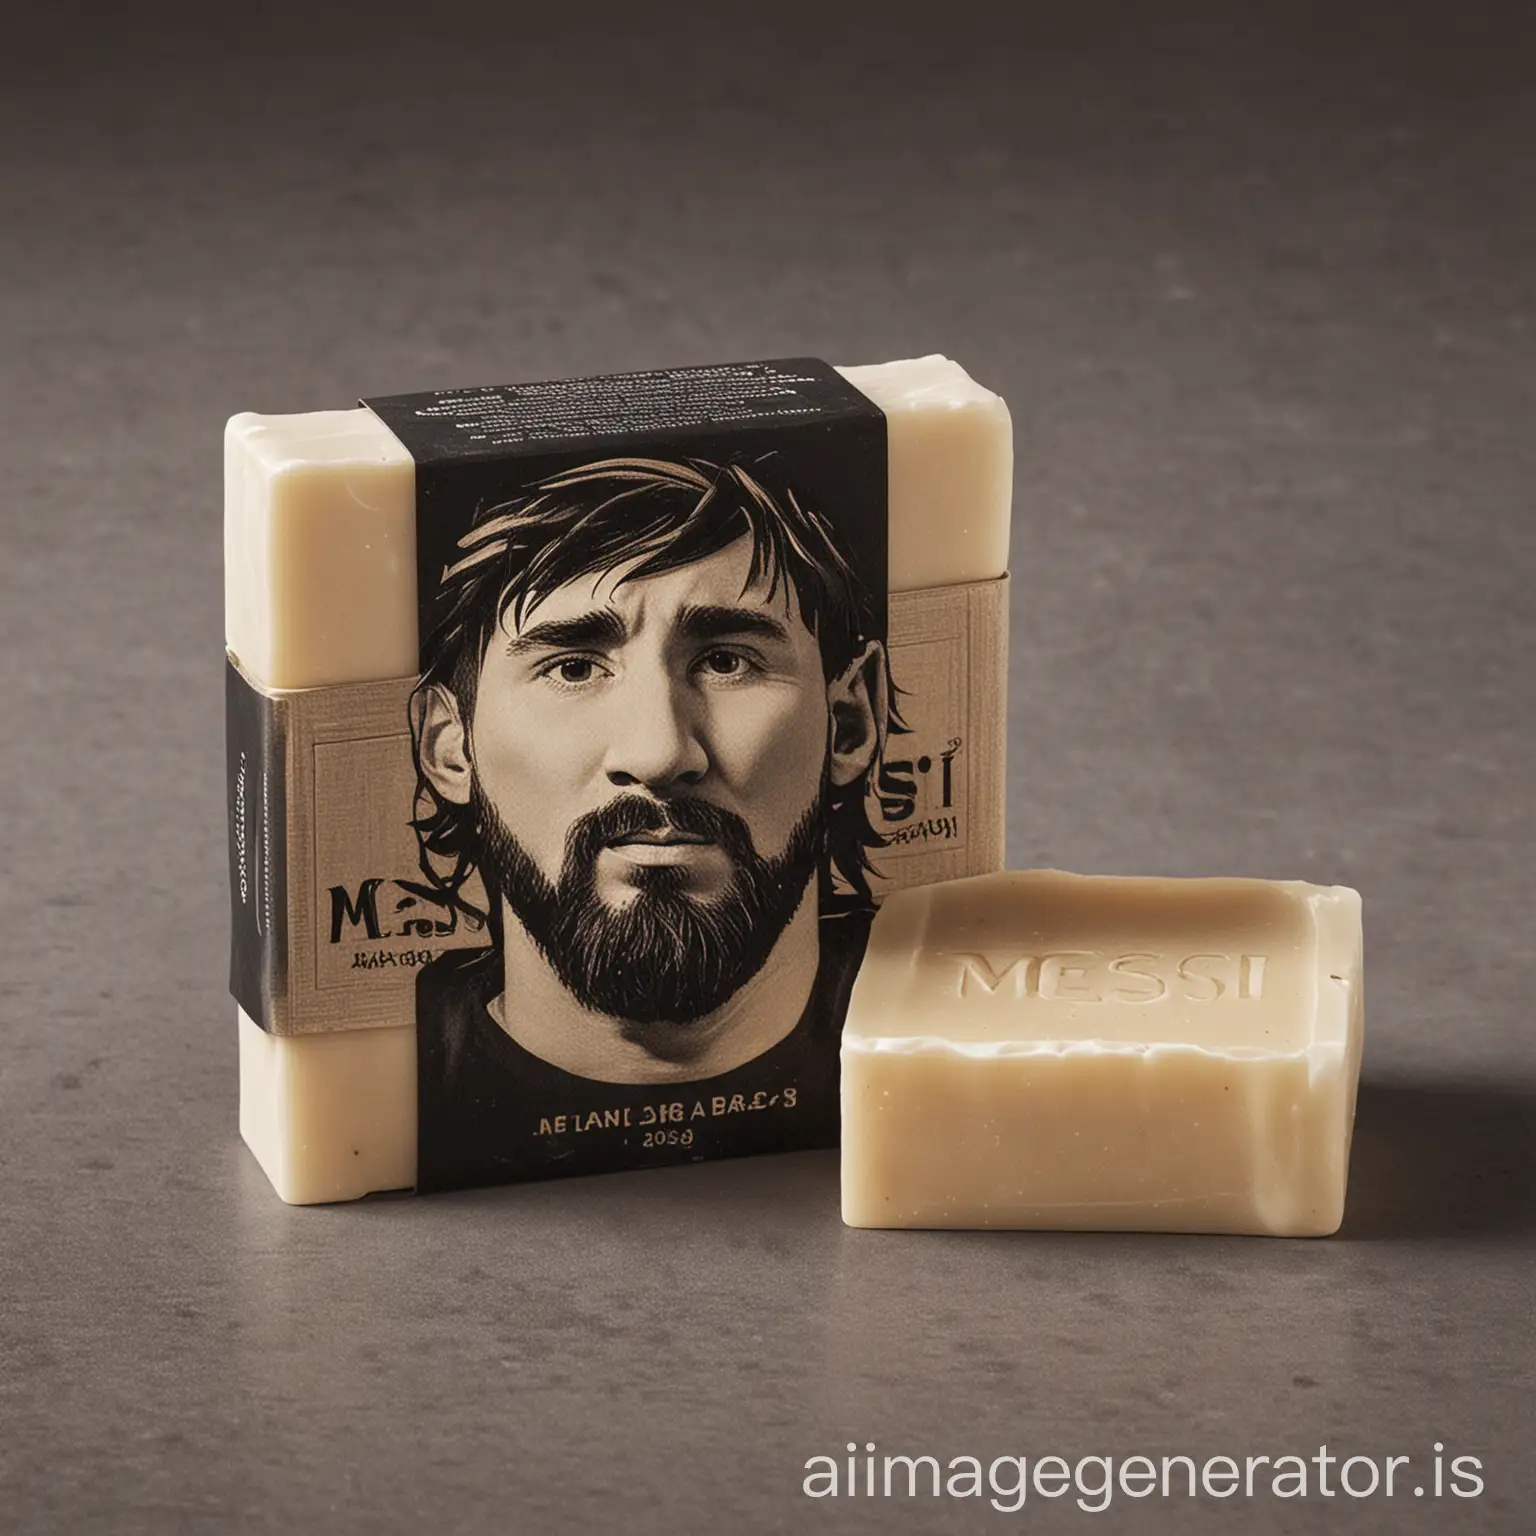 Messi-Branding-Soap-Legendary-Footballer-Endorses-Premium-Skincare-Product